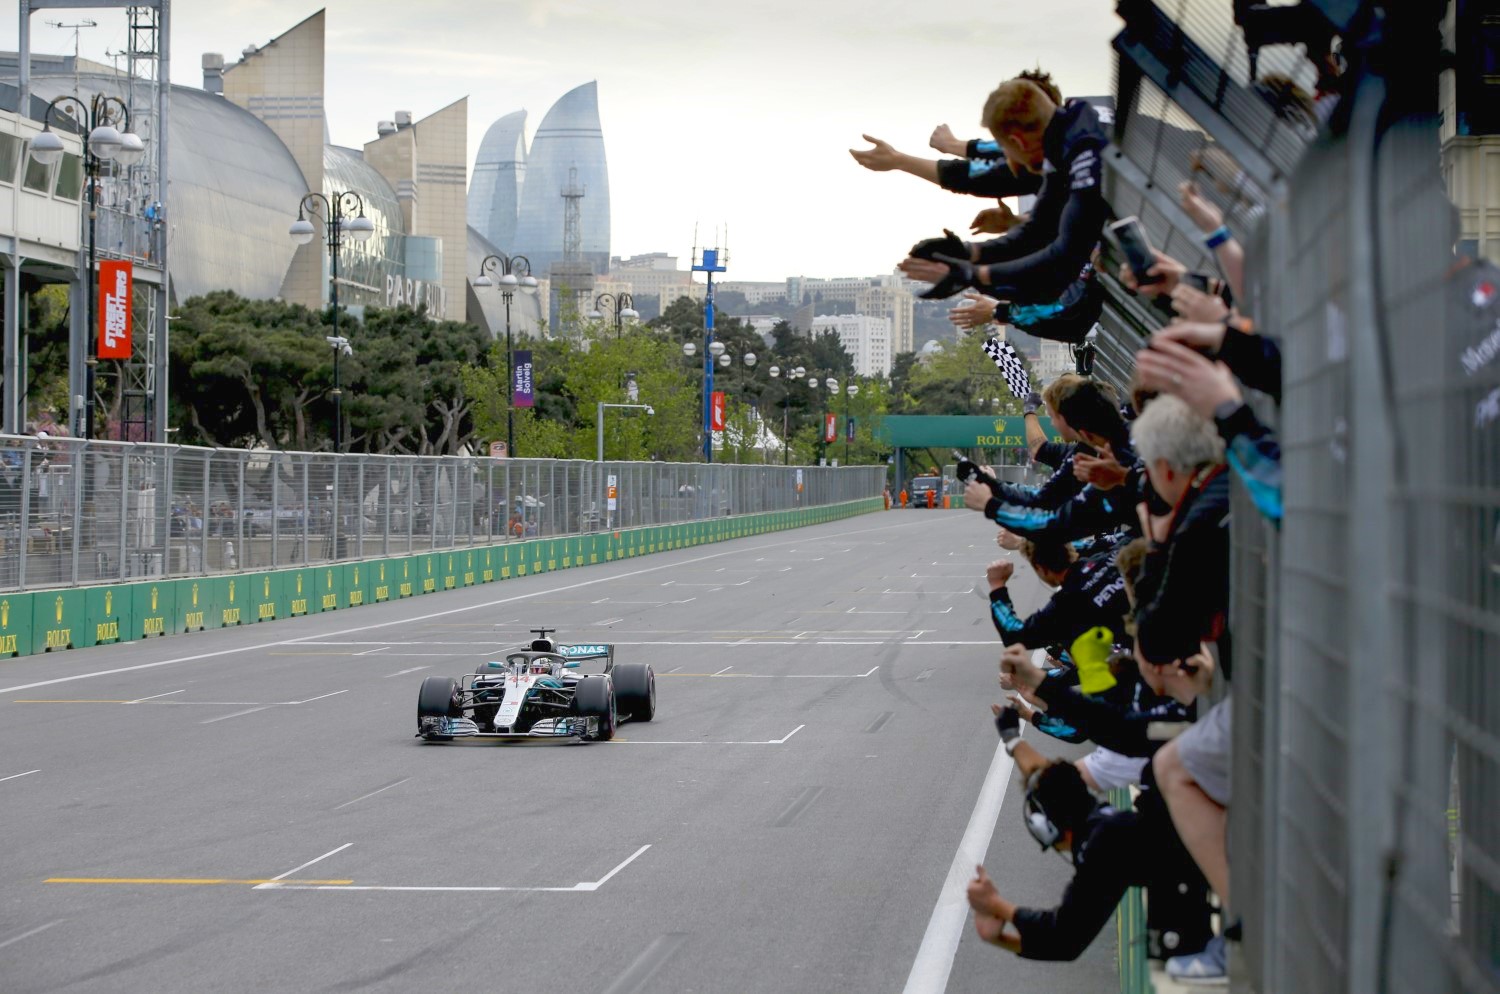 How far will Hamilton be ahead of the Ferraris this weekend? Will Mercedes bring better upgrades than Ferrari?